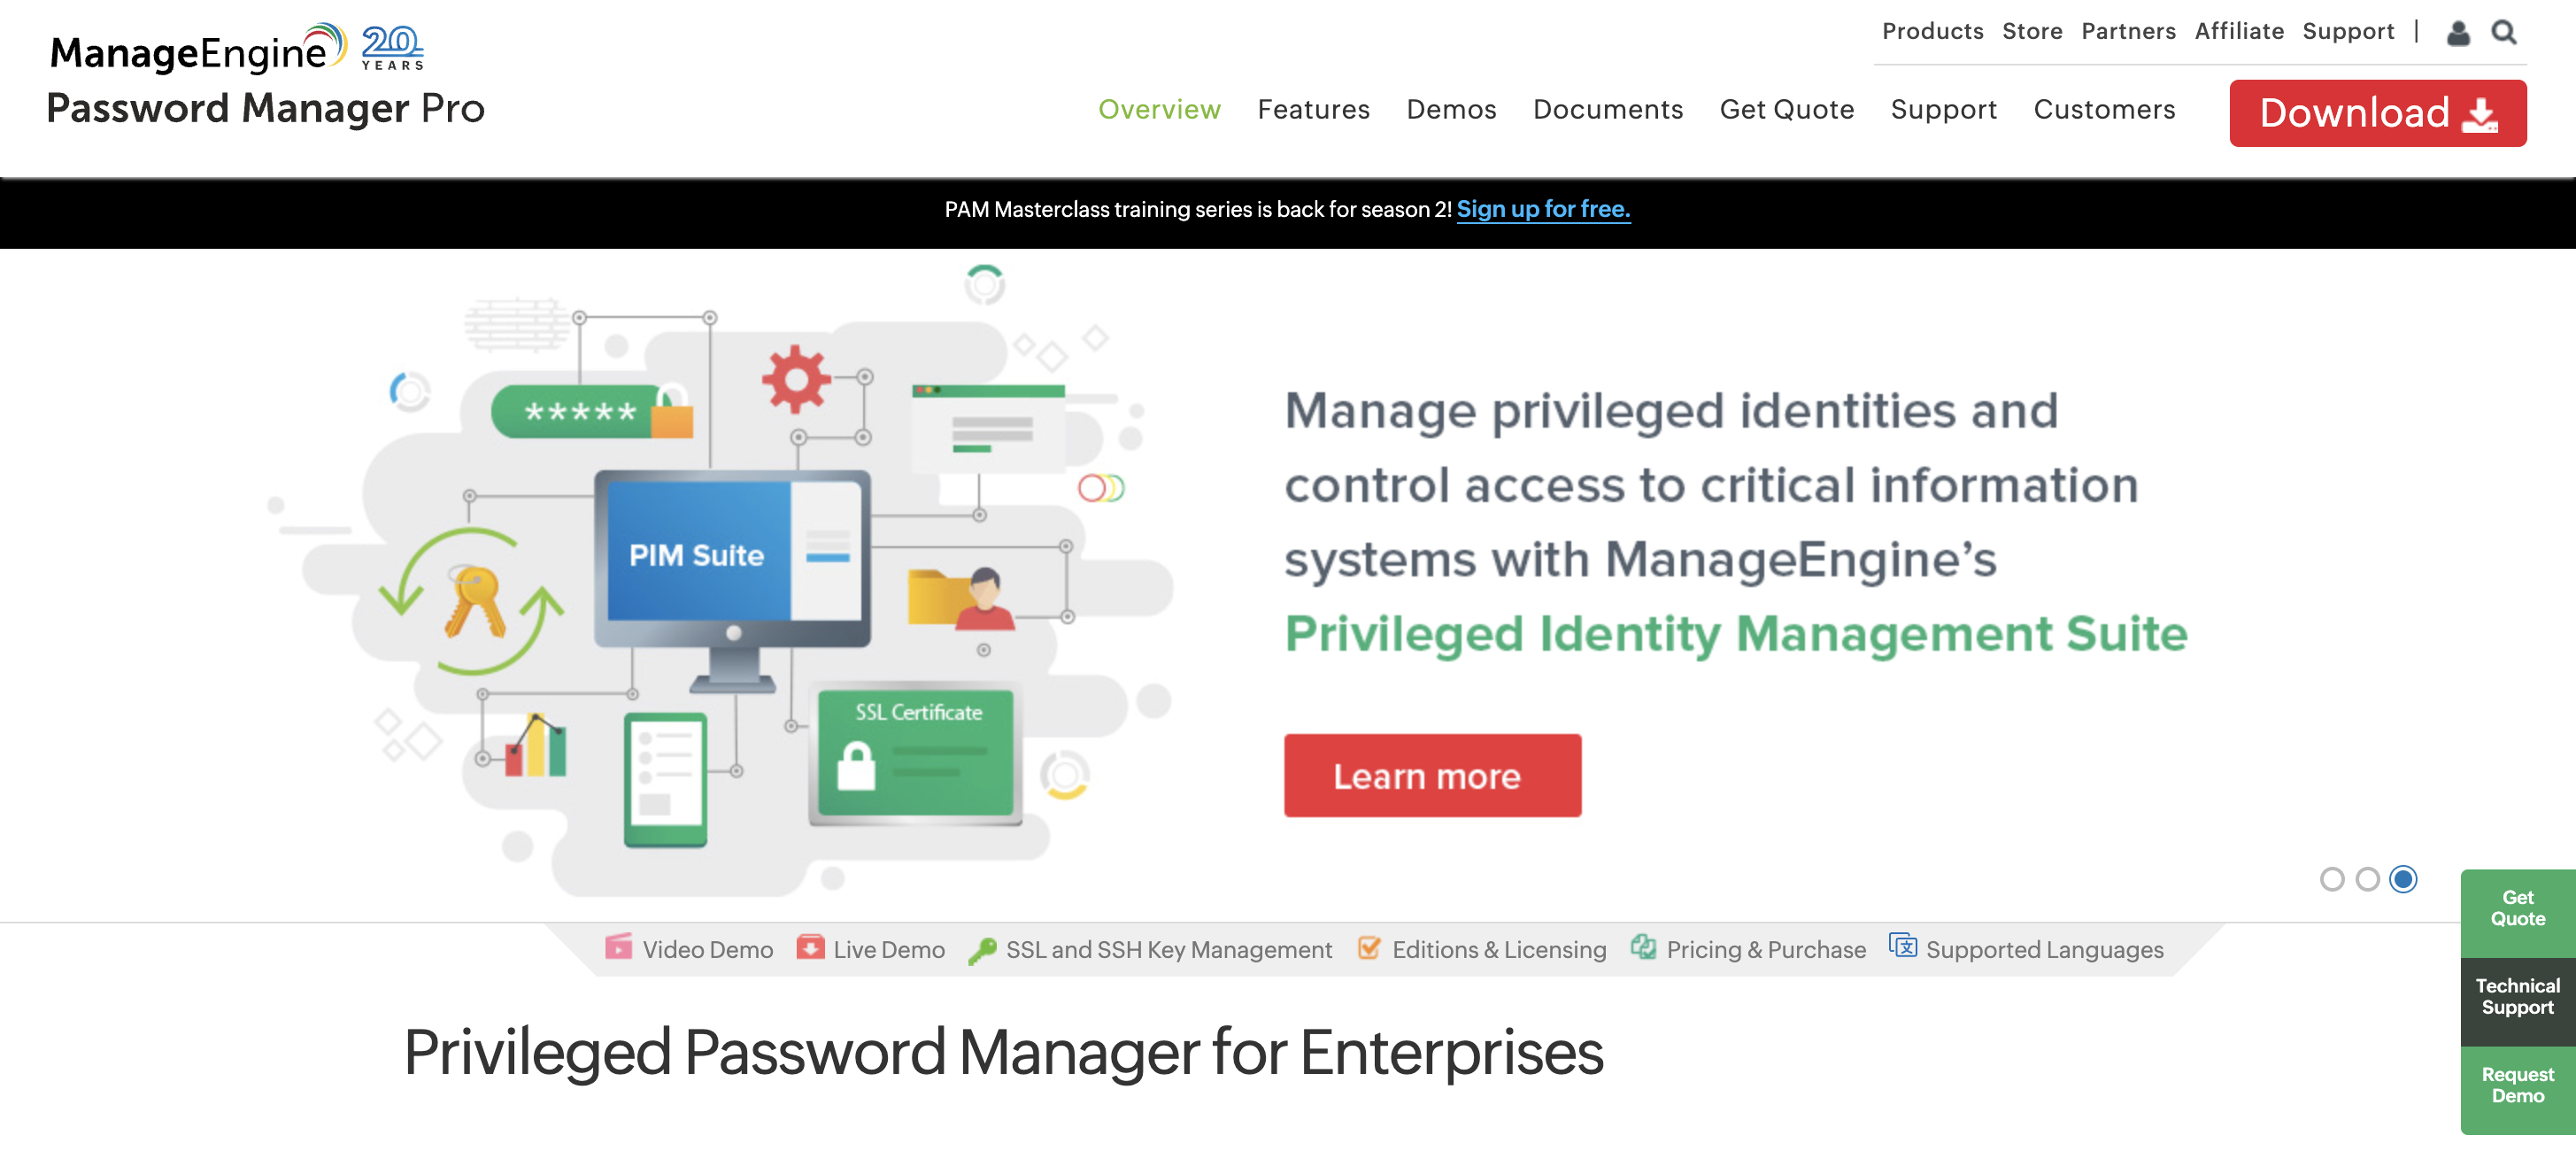 MaamuleEngine Password Manager Pro